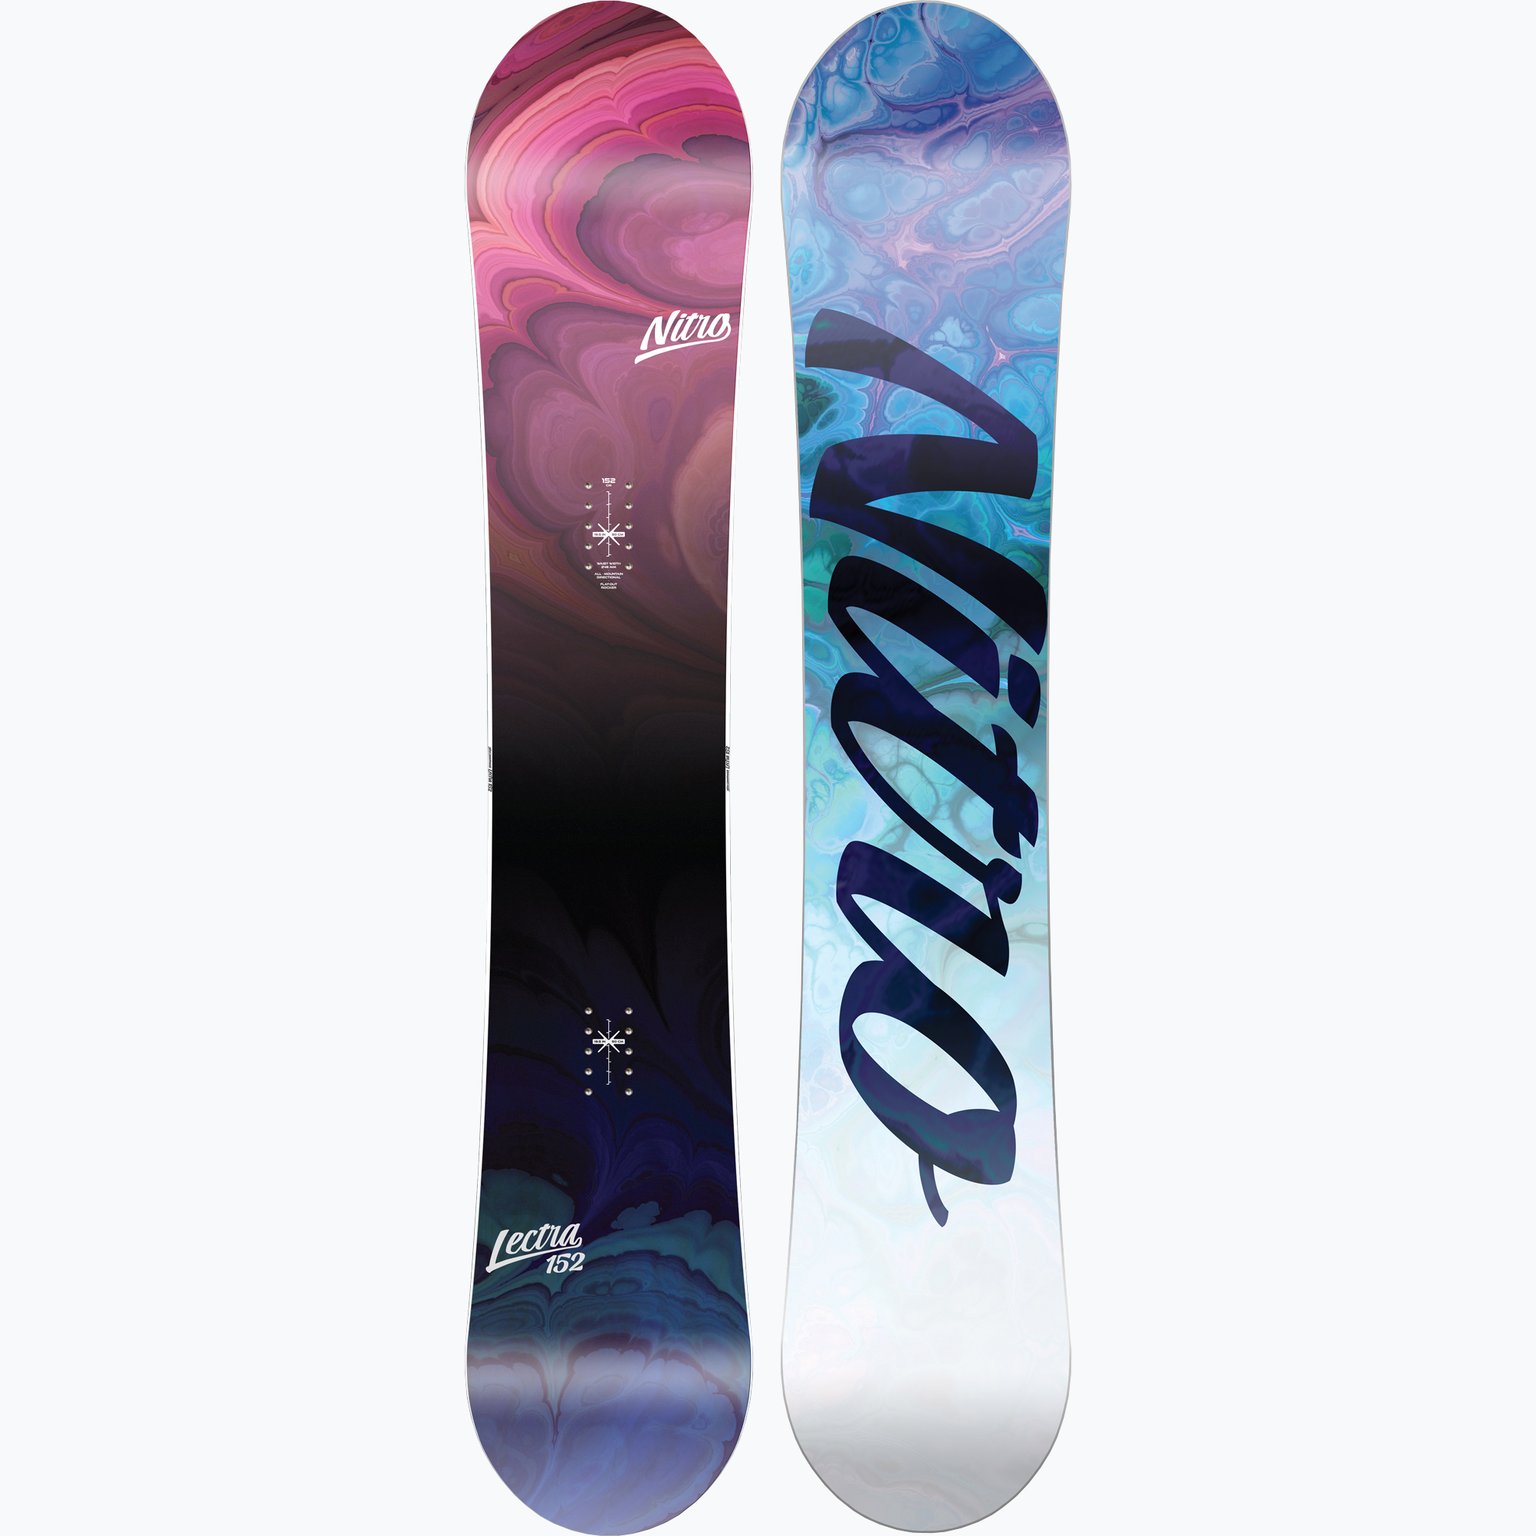 Lectra snowboard